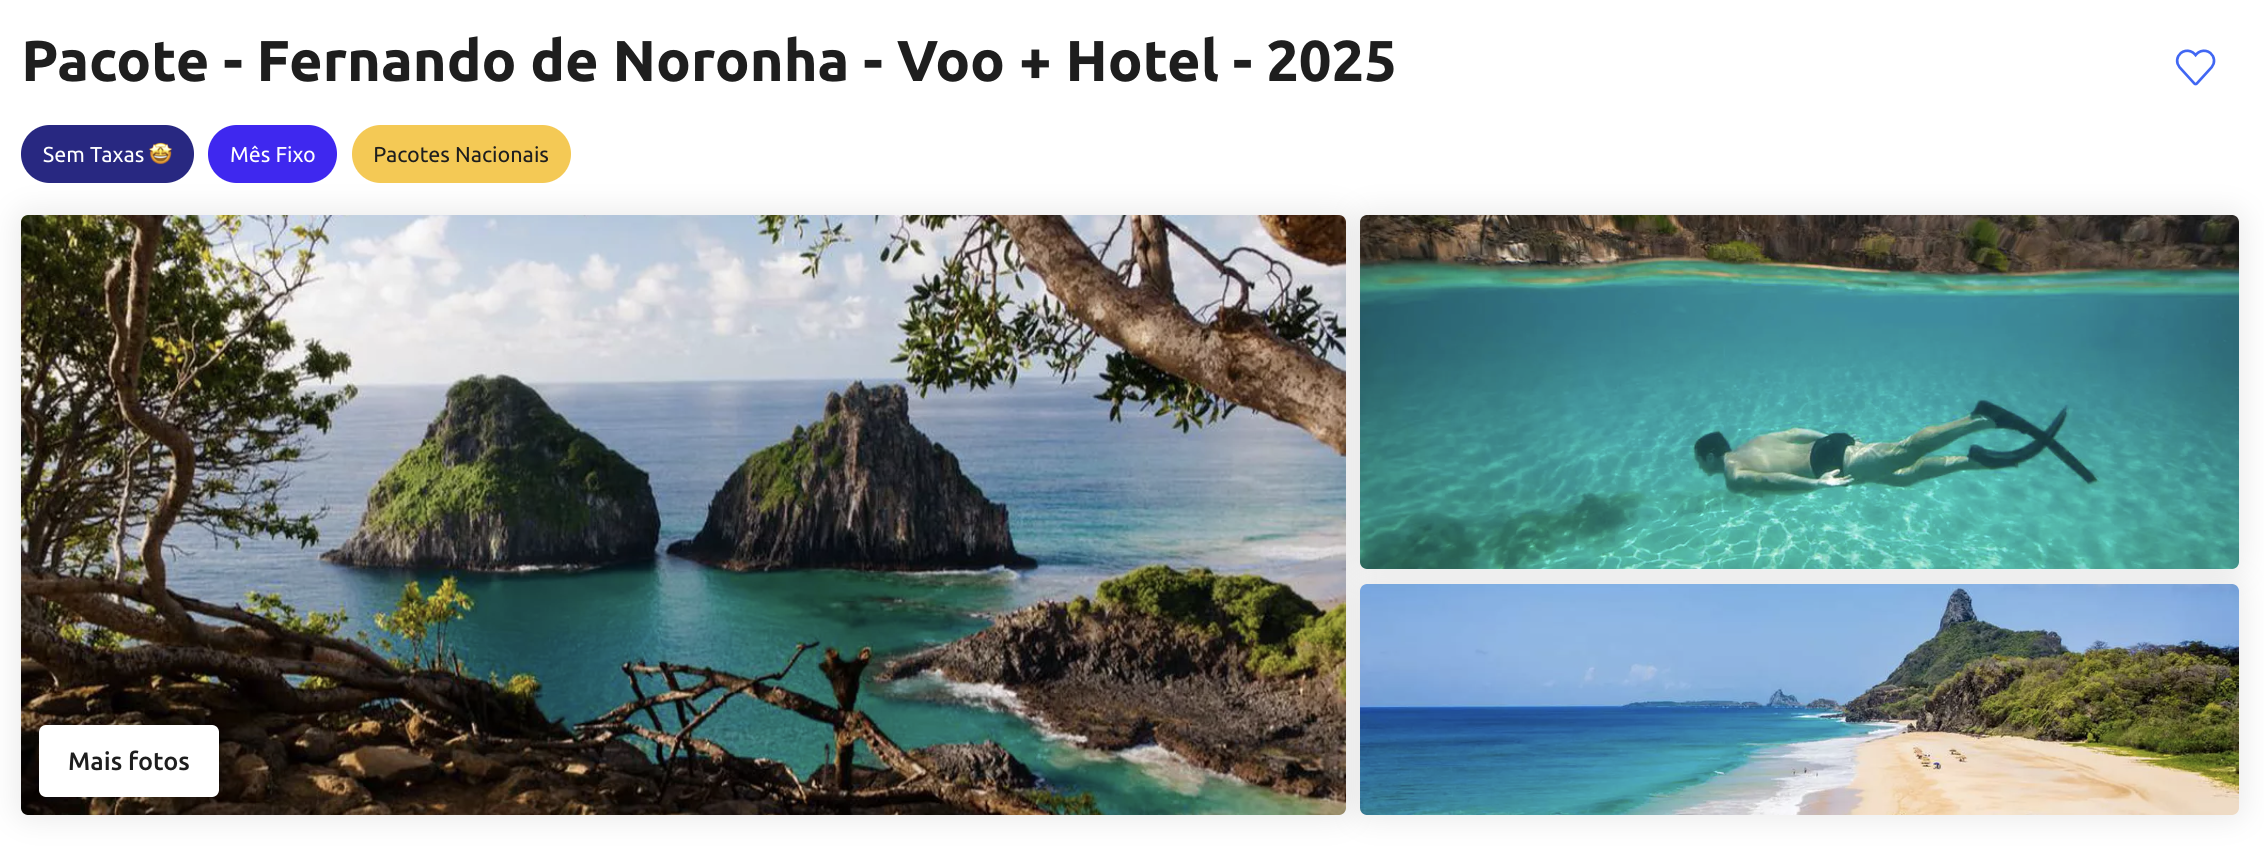 Pacote - Fernando de Noronha - Voo + Hotel - 2025